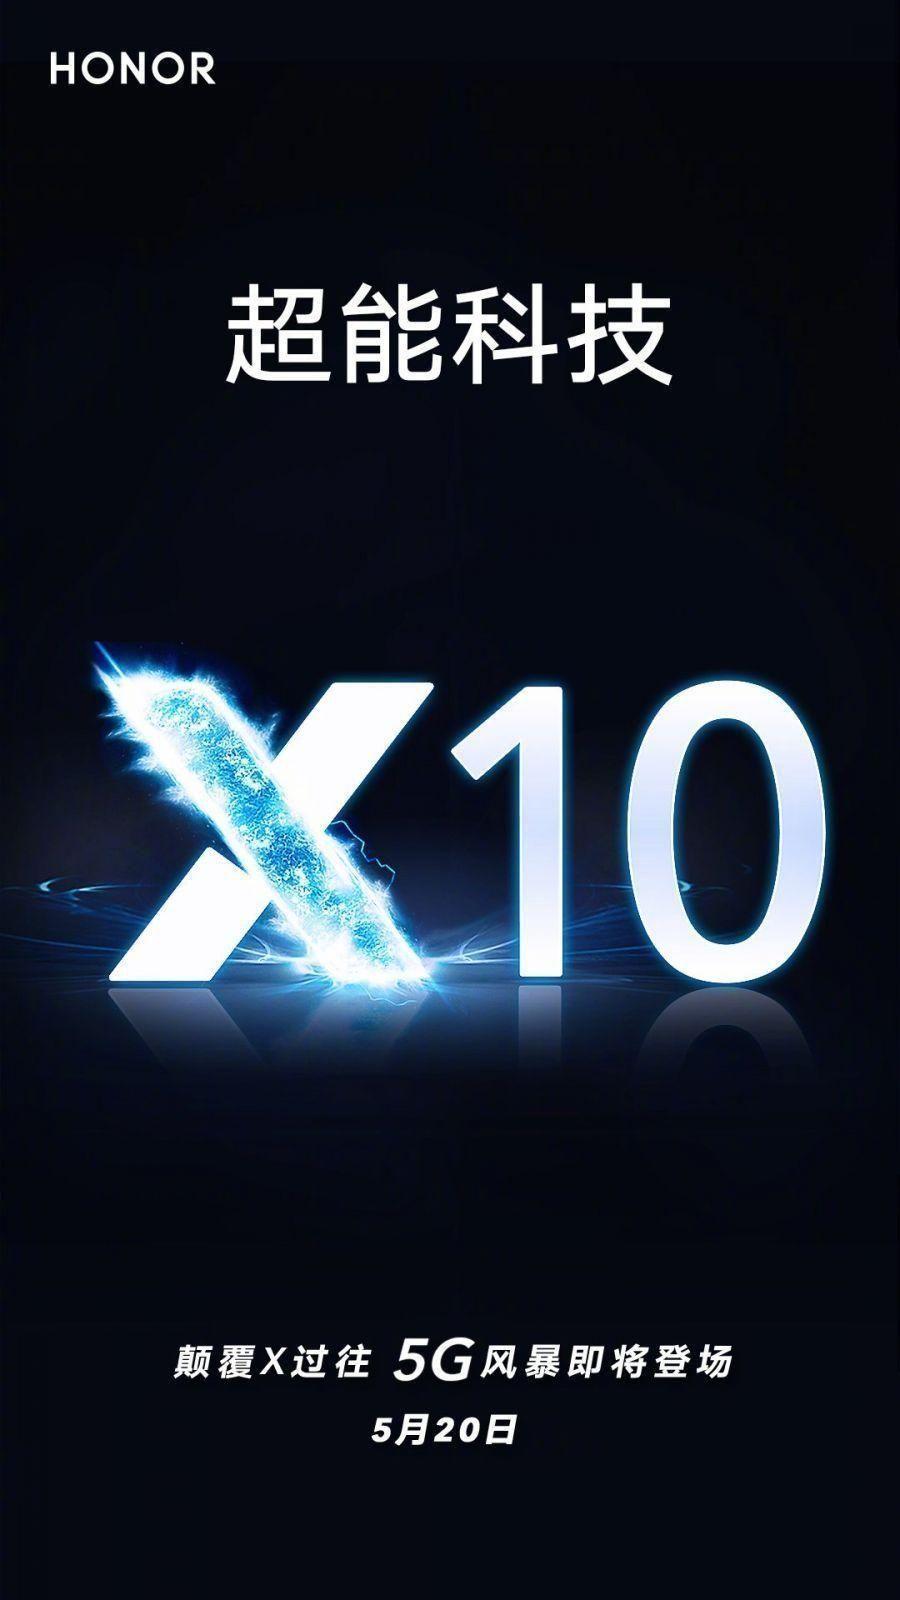 Honor X10 дебютирует 20 мая (hnor x10 launchd ate)